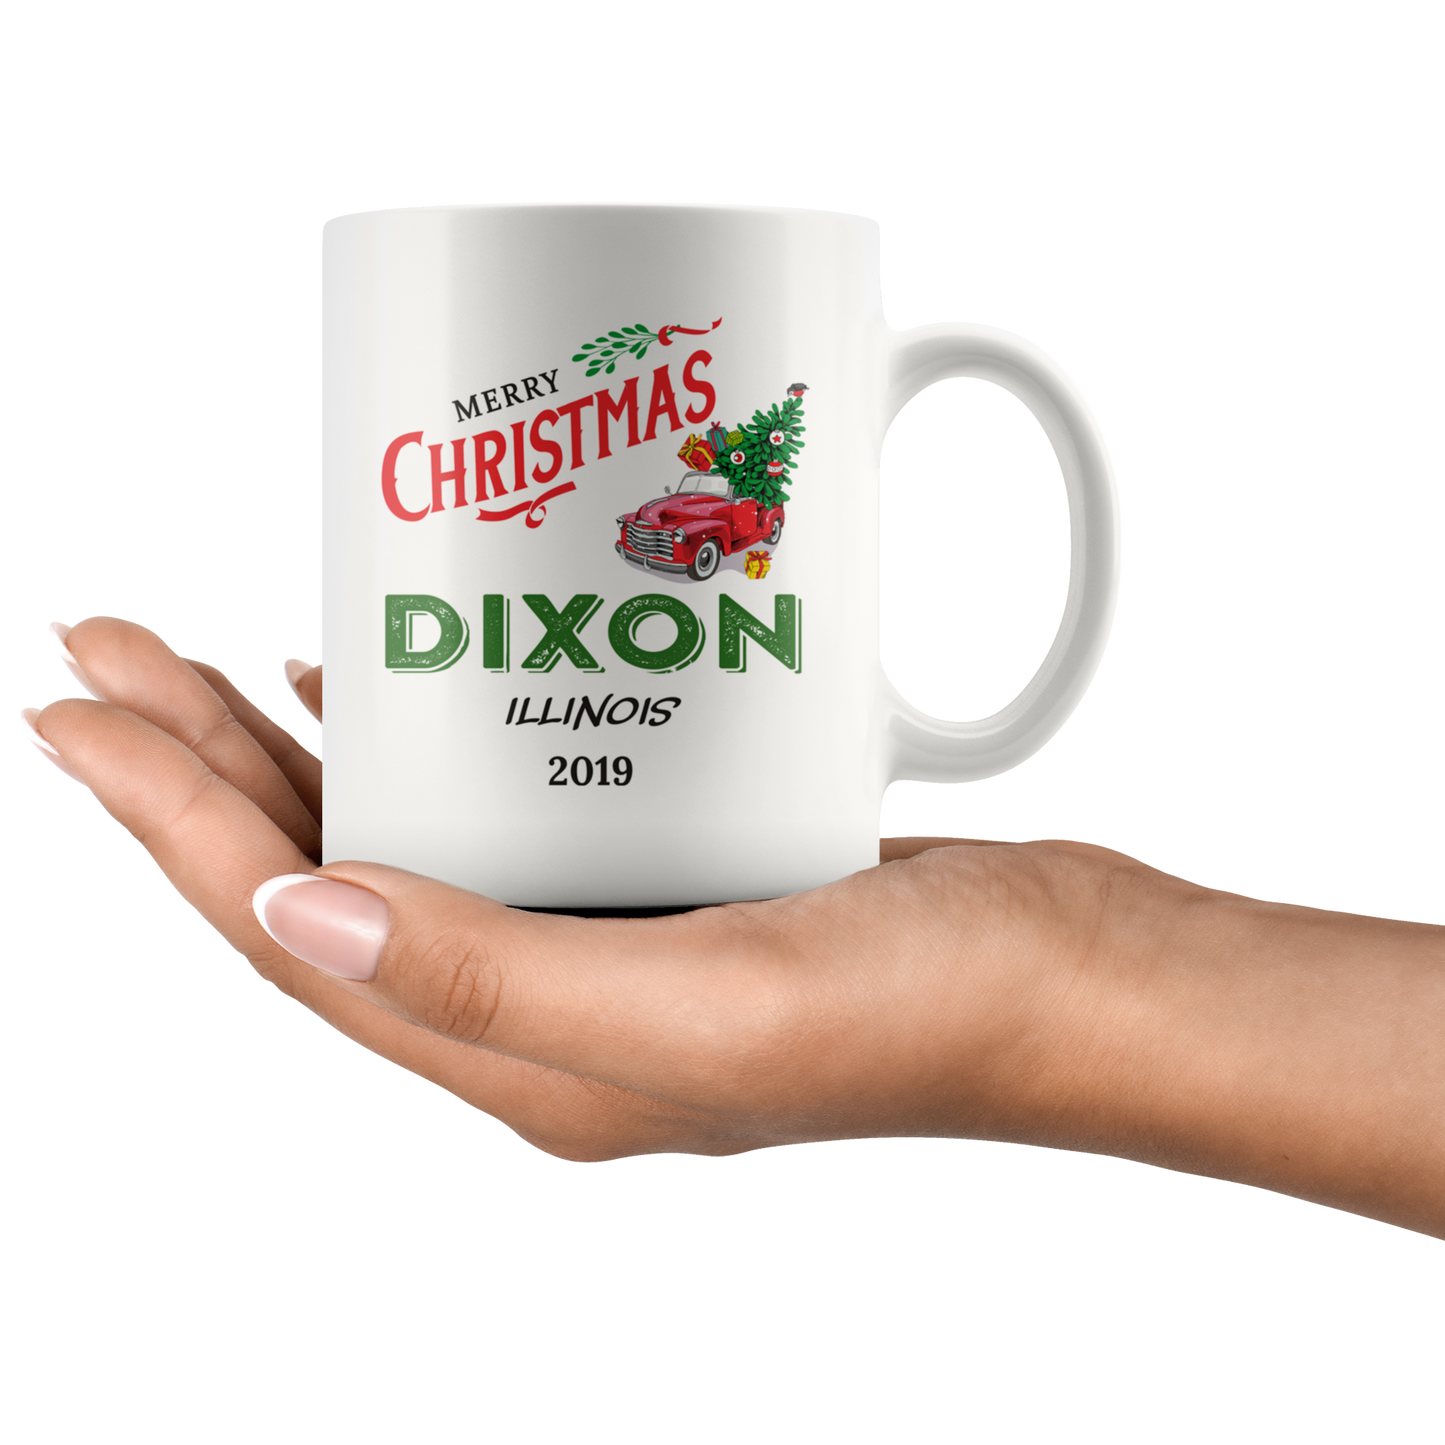 ND20746903-sp-19680 - 2019 Merry Christmas Mug Dixon Illinois State - Bringing Hom